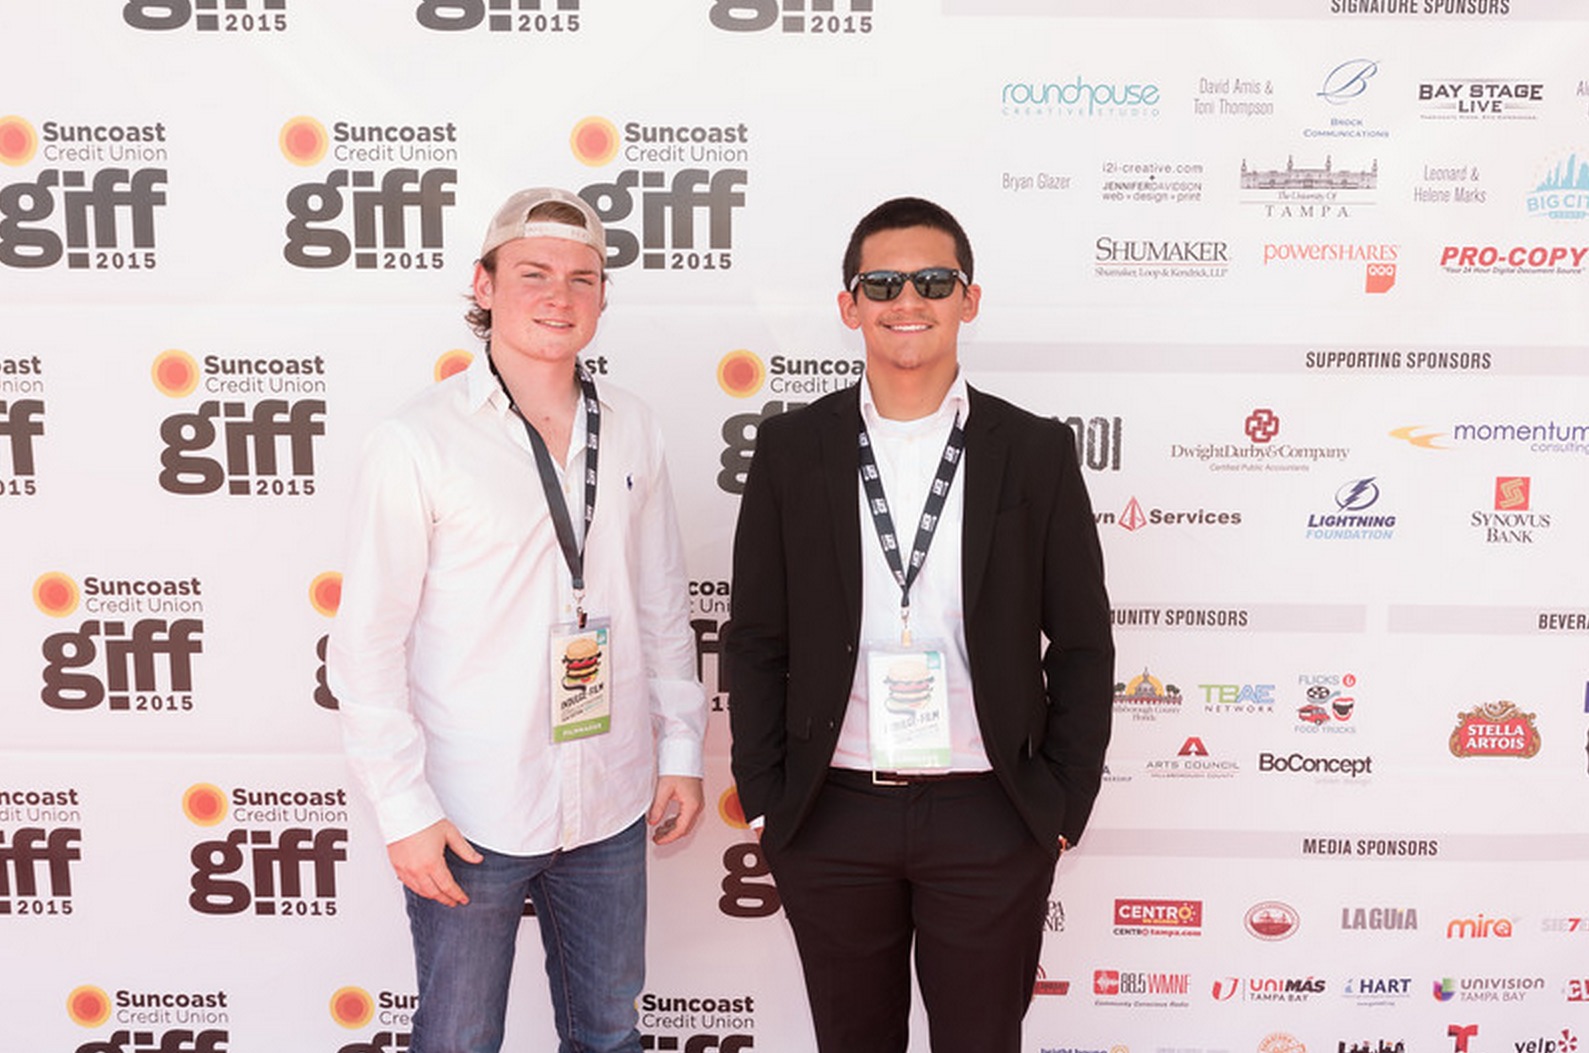 Mitchell Kenneth Perera and James Biggins at the Gasparilla International Film Festival